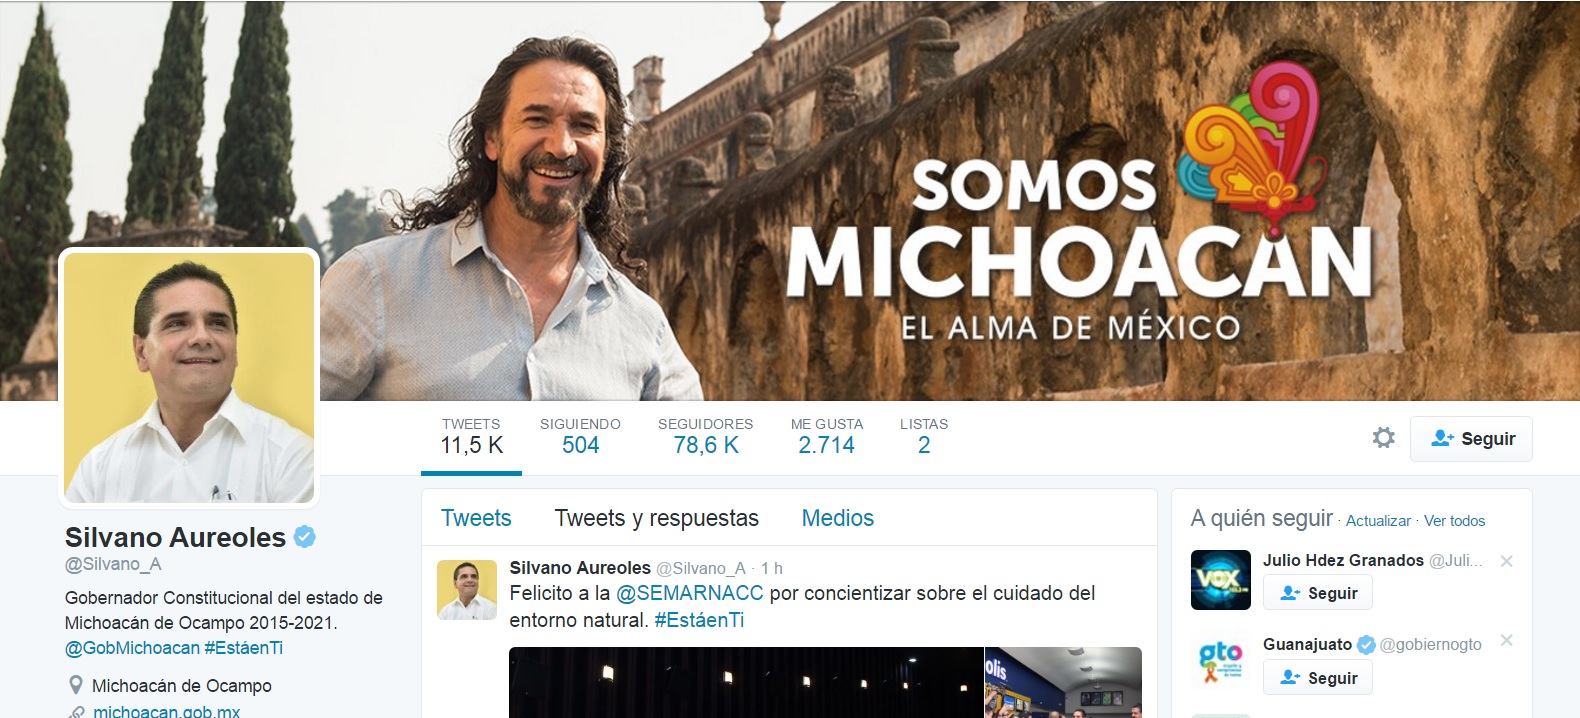 Silvano Aureoles Twitter promo Somos Michoacan El Buki